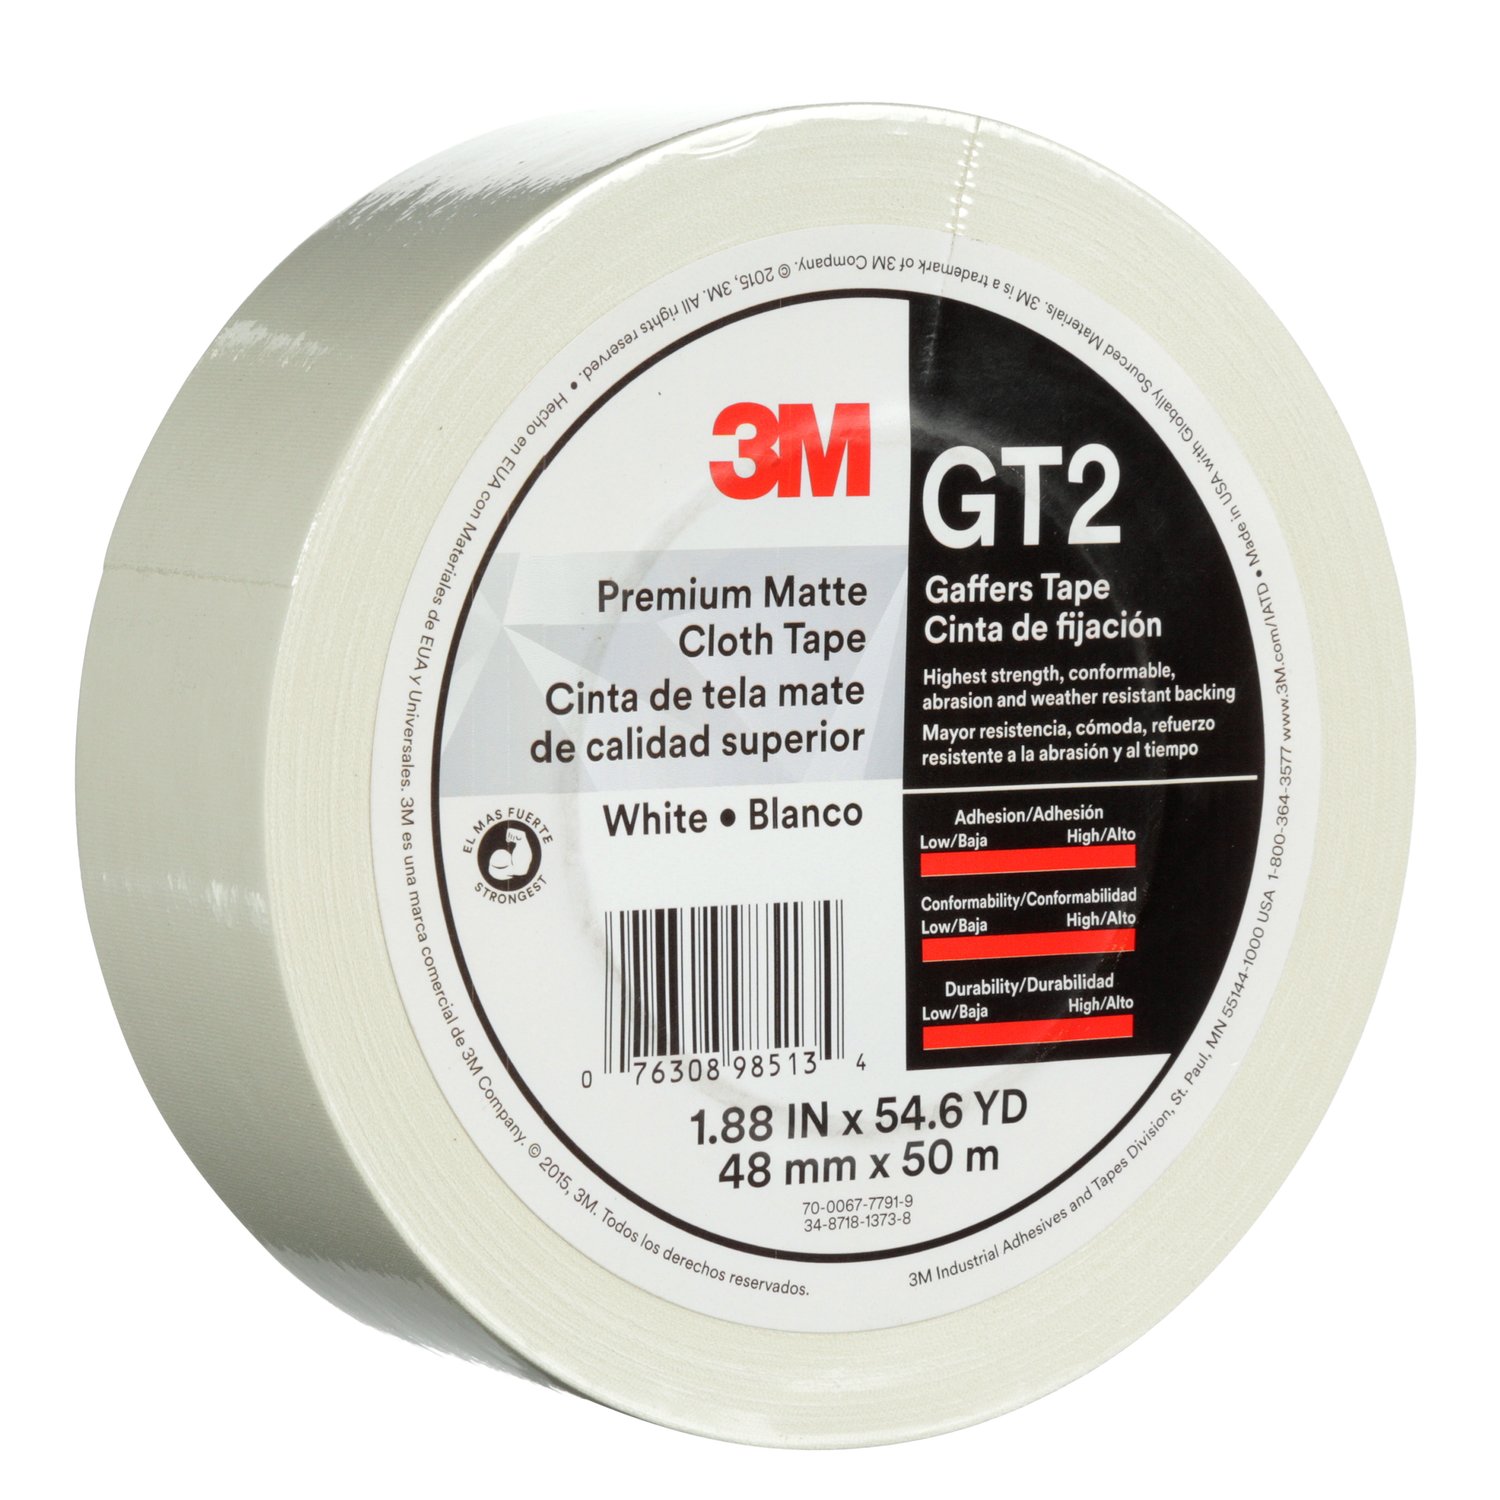 7010375514 - 3M Premium Matte Cloth (Gaffers) Tape GT2, White, 48 mm x 50 m 11 mil,
24/Case